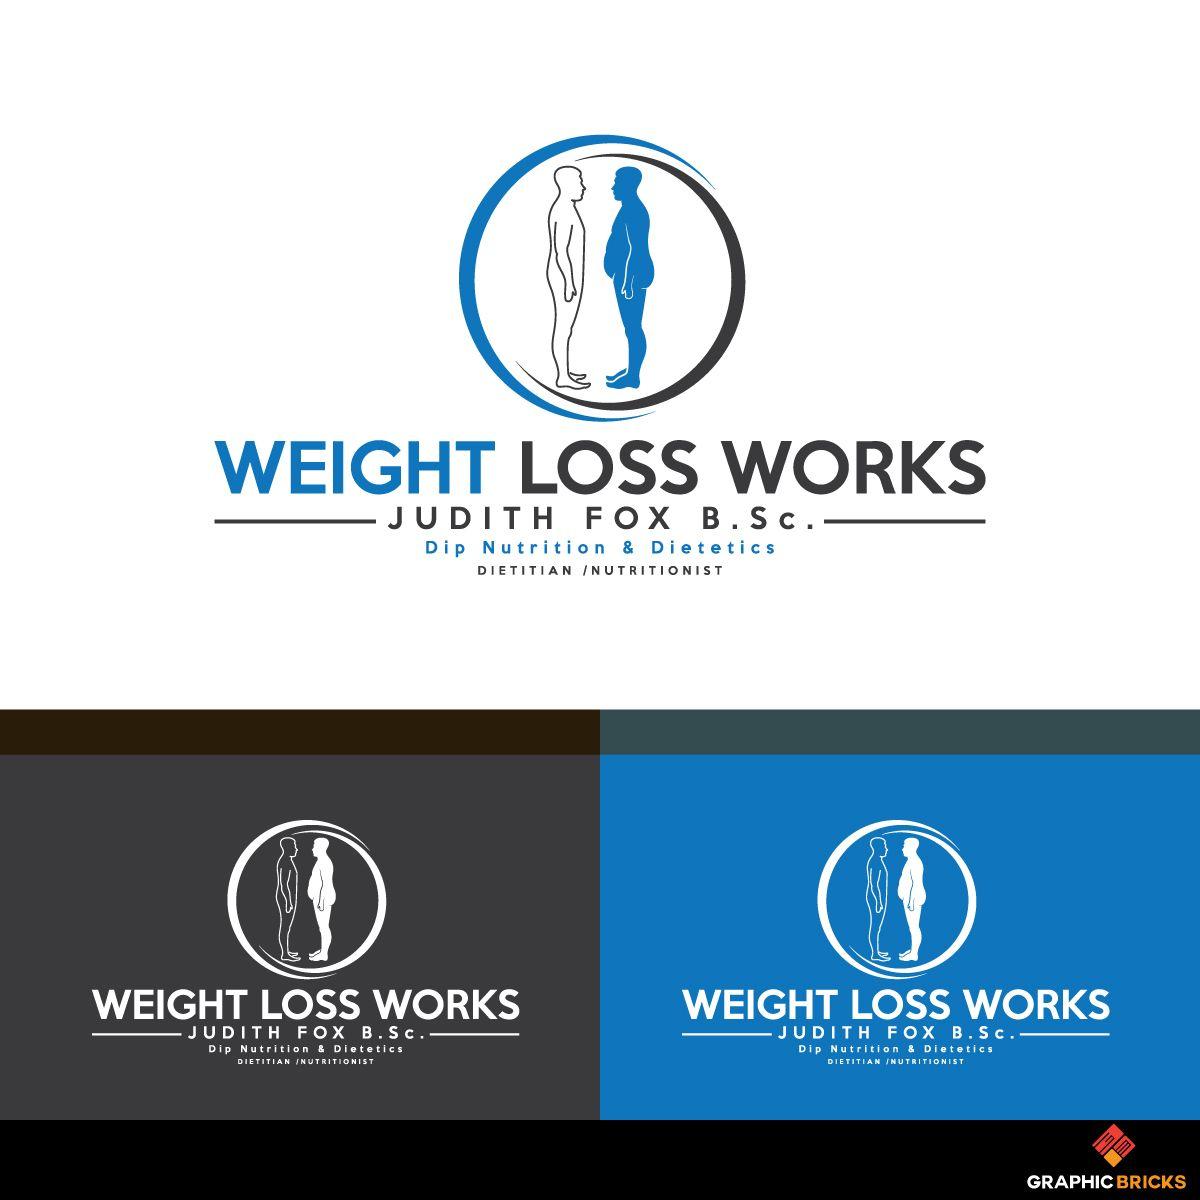 Dip Logo - Logo Design for WEIGHT LOSS WORKS. JUDITH FOX B.Sc.Dip Nutrition